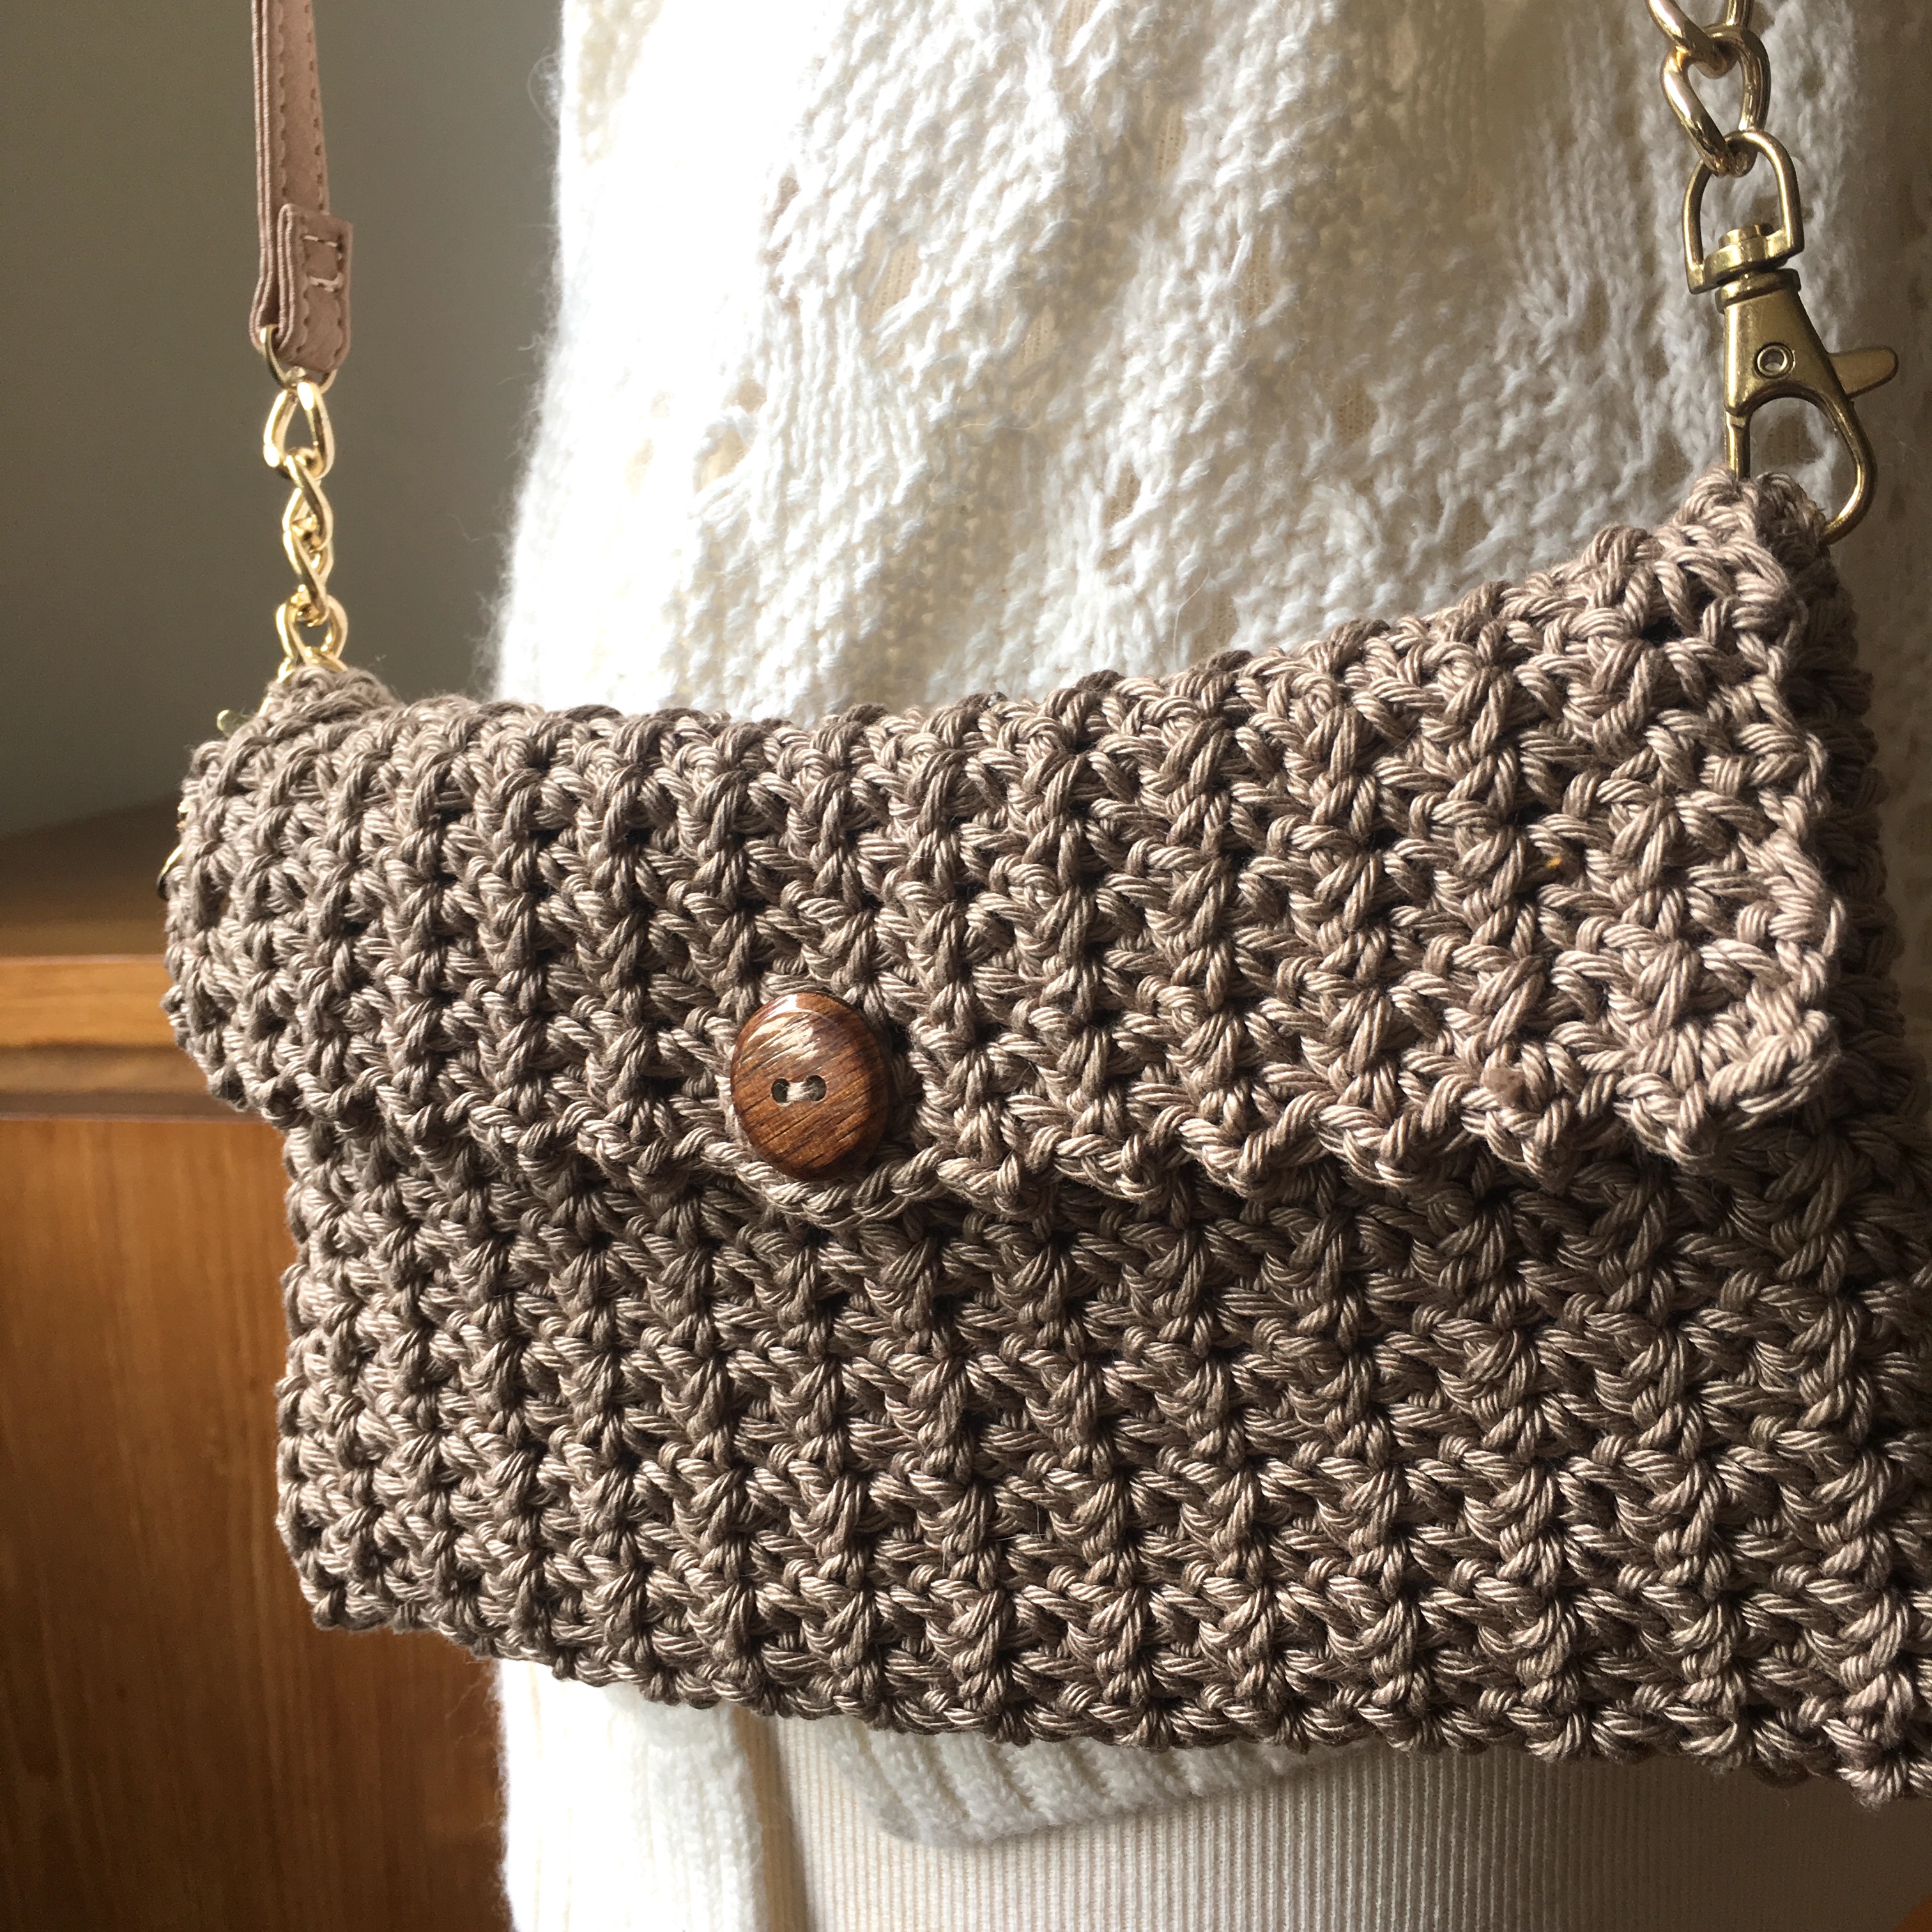 Urban Nomad Crochet Boho Bag | Free Pattern + Tutorial